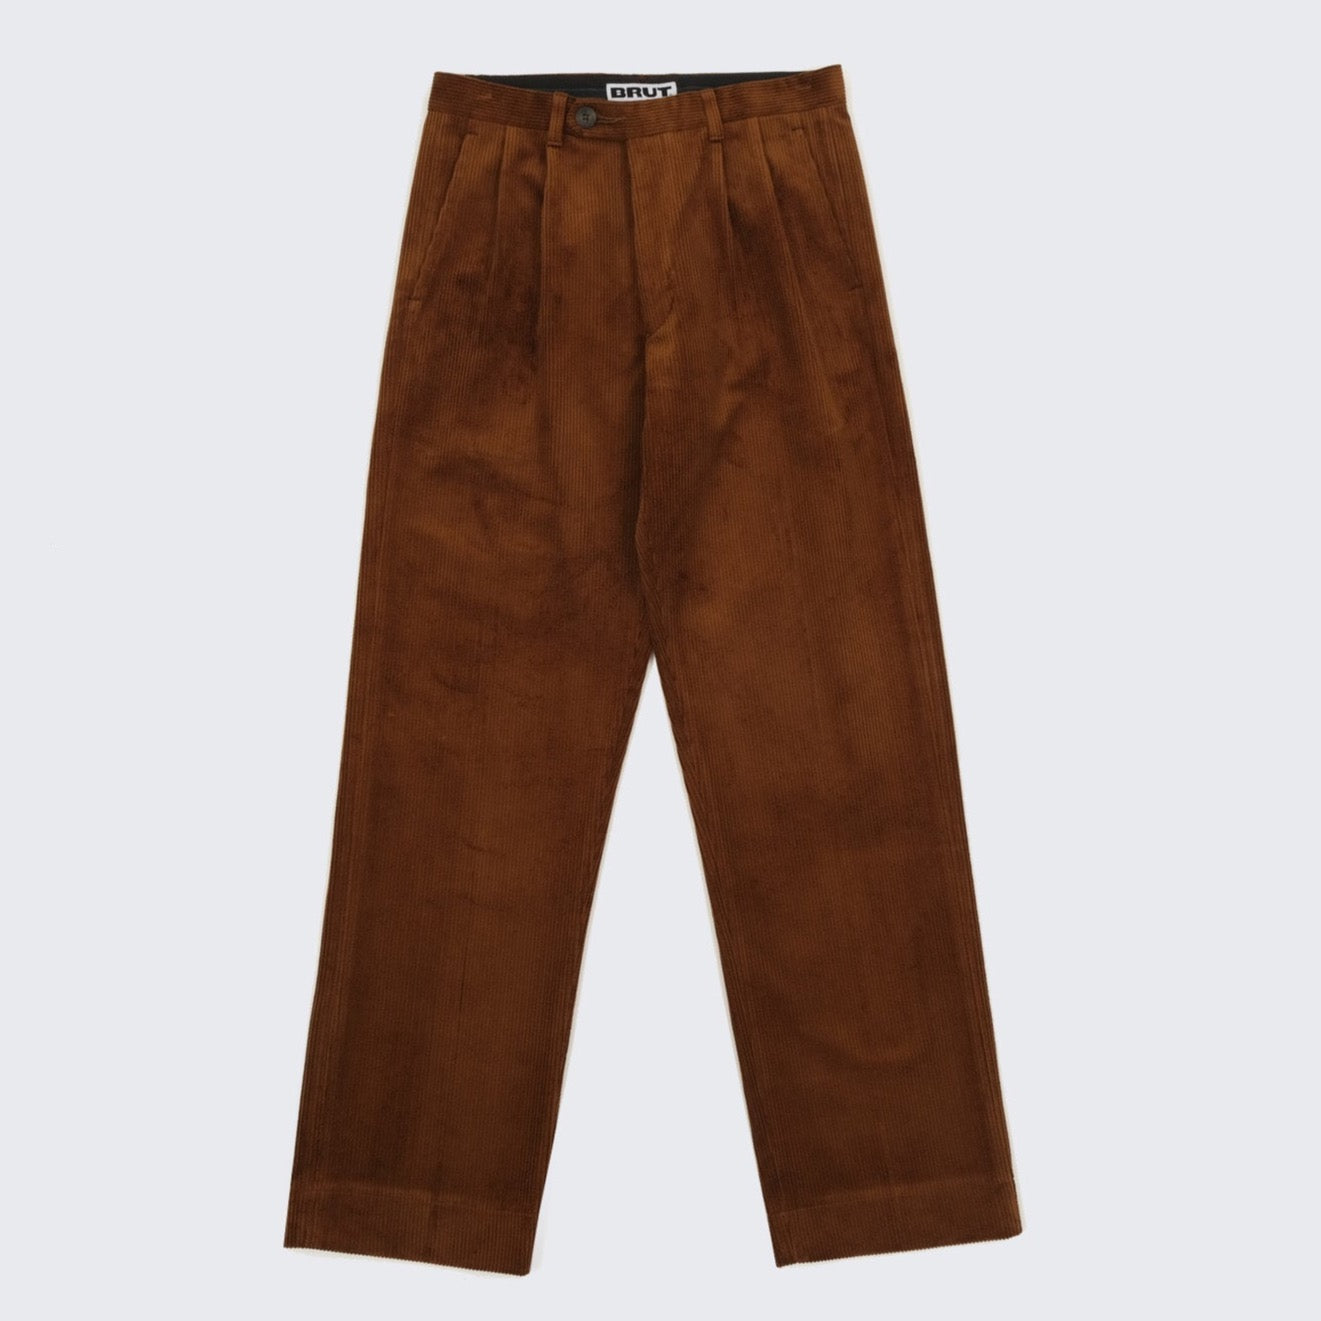 IVY CORD' High Waist Pants | BRUT Vintage Shop | Worldwide